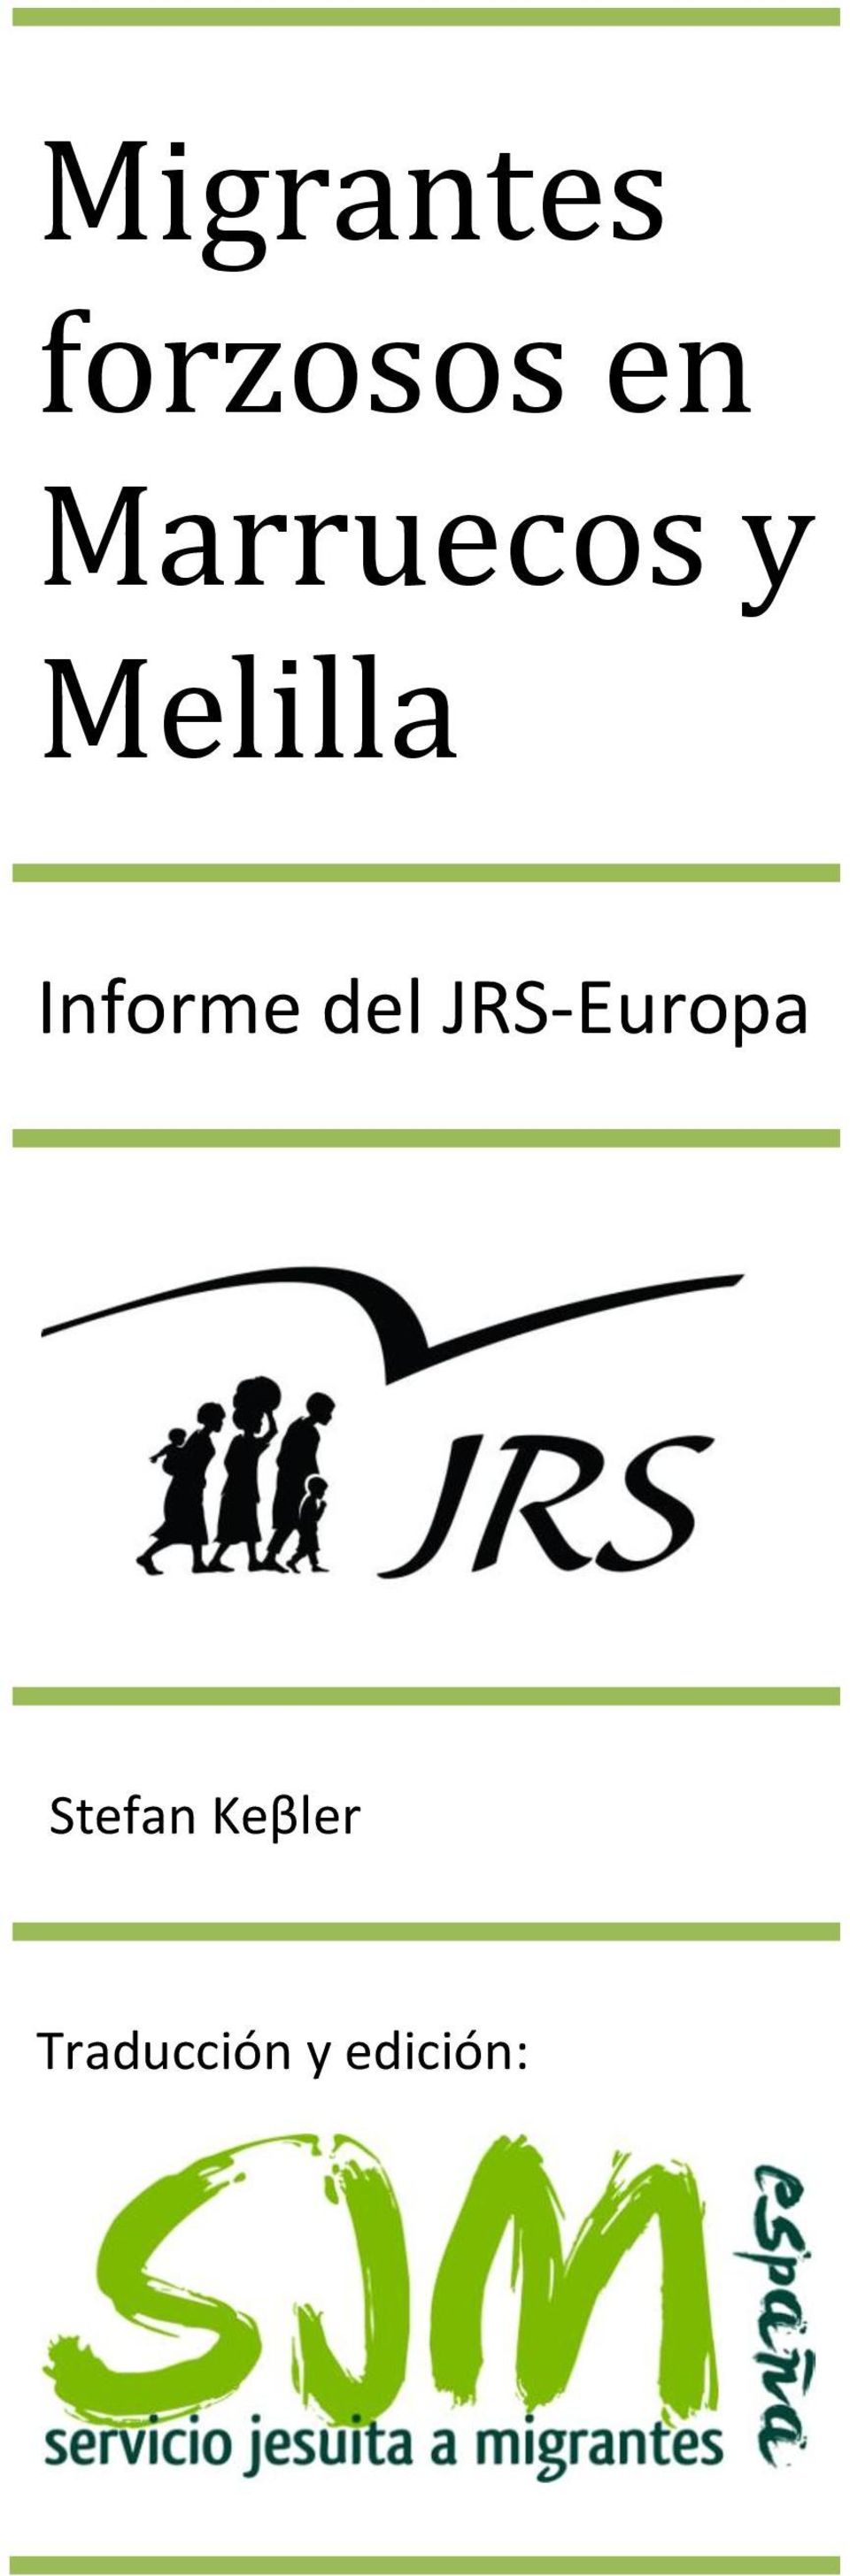 Informe del JRS-Europa